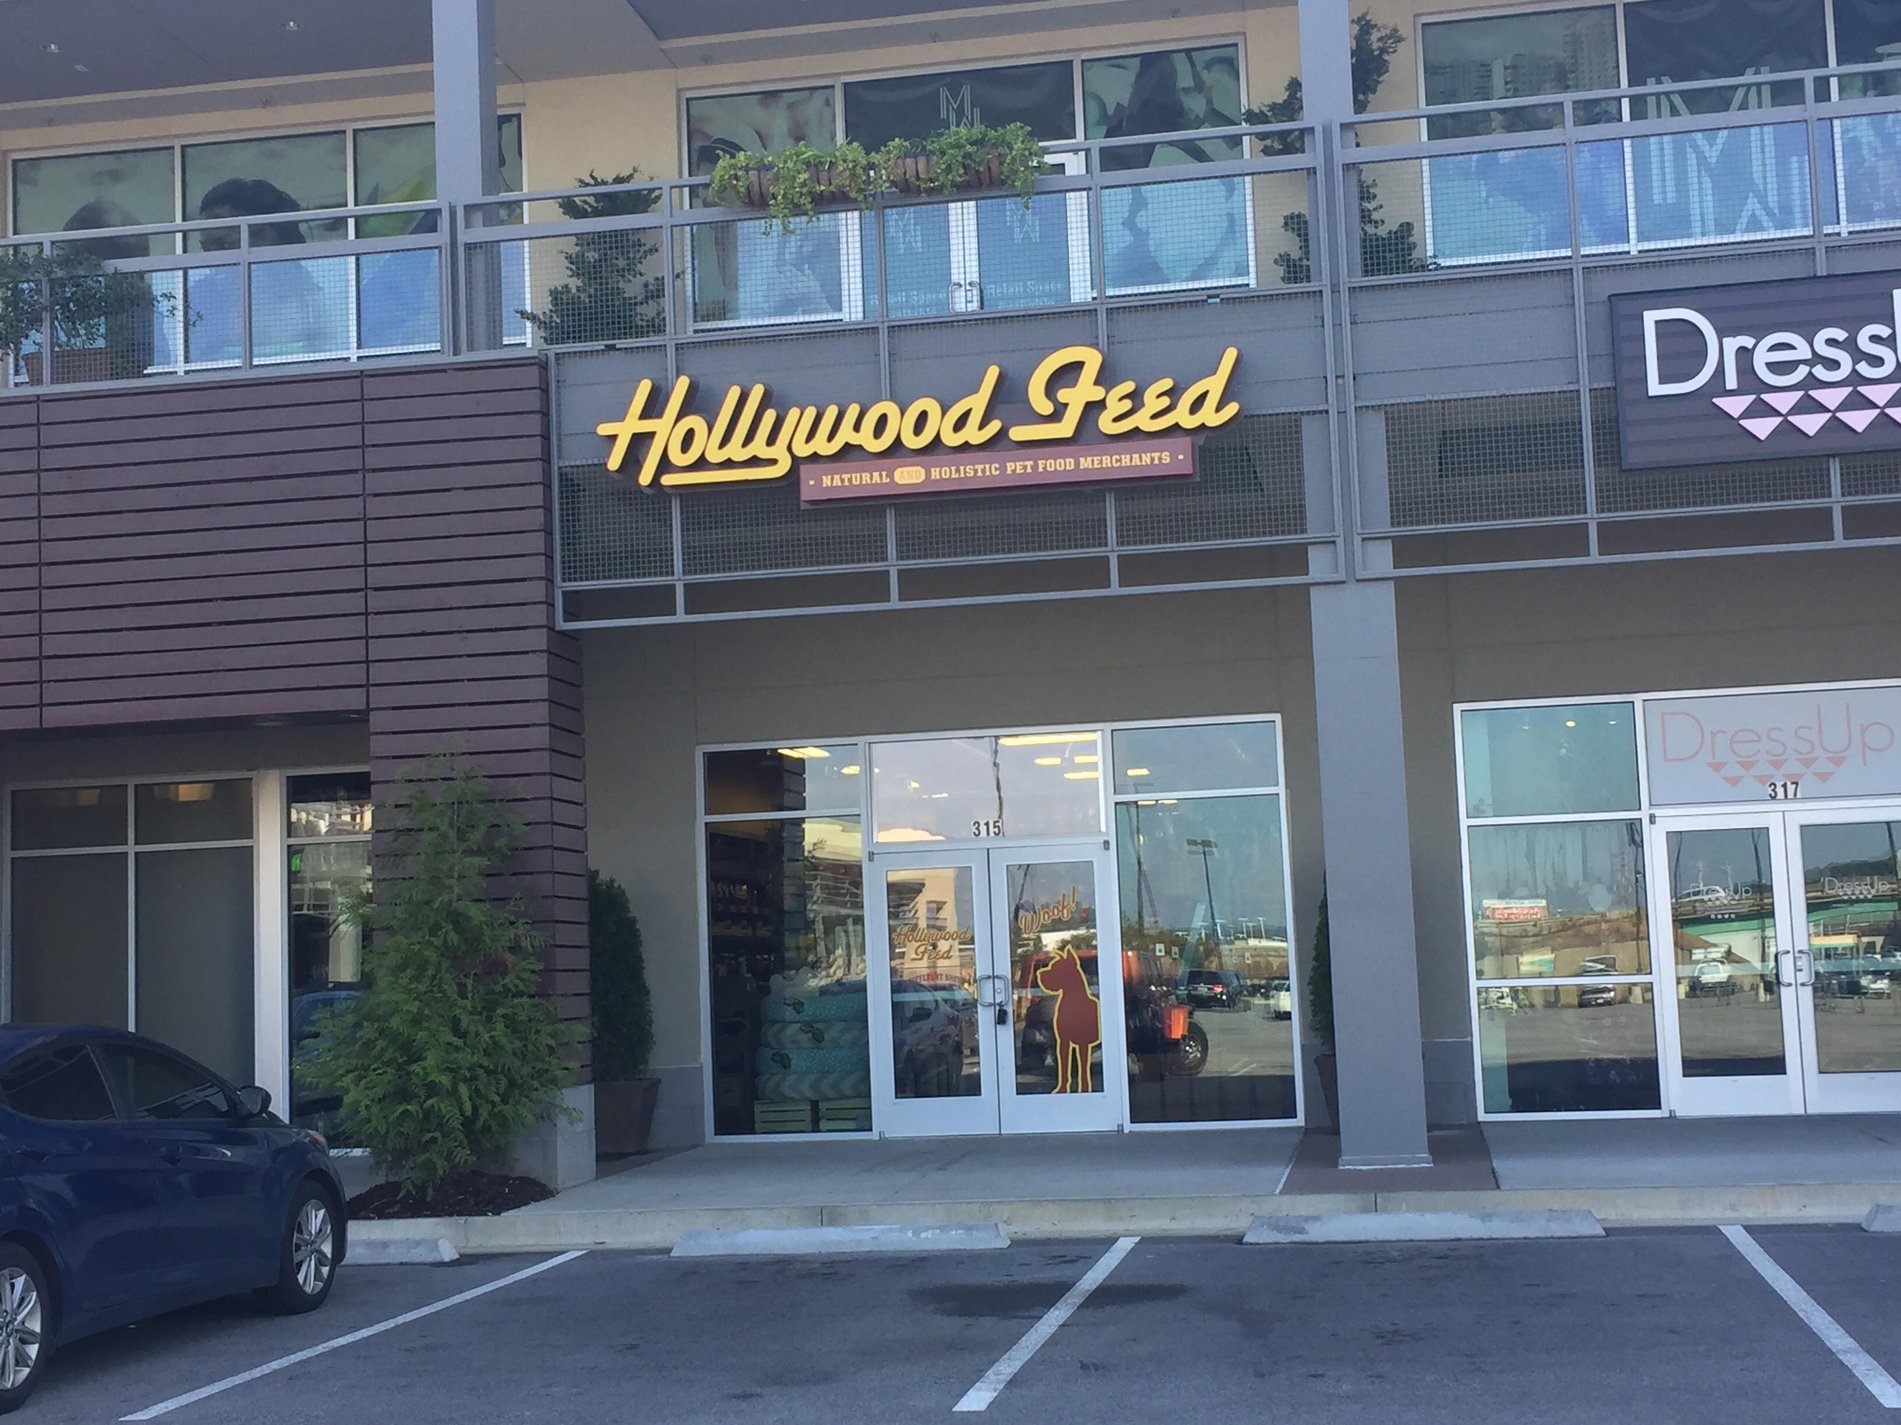 Hollywood Feed Merchant's Walk: {KEYWORDS} in Huntsville, AL